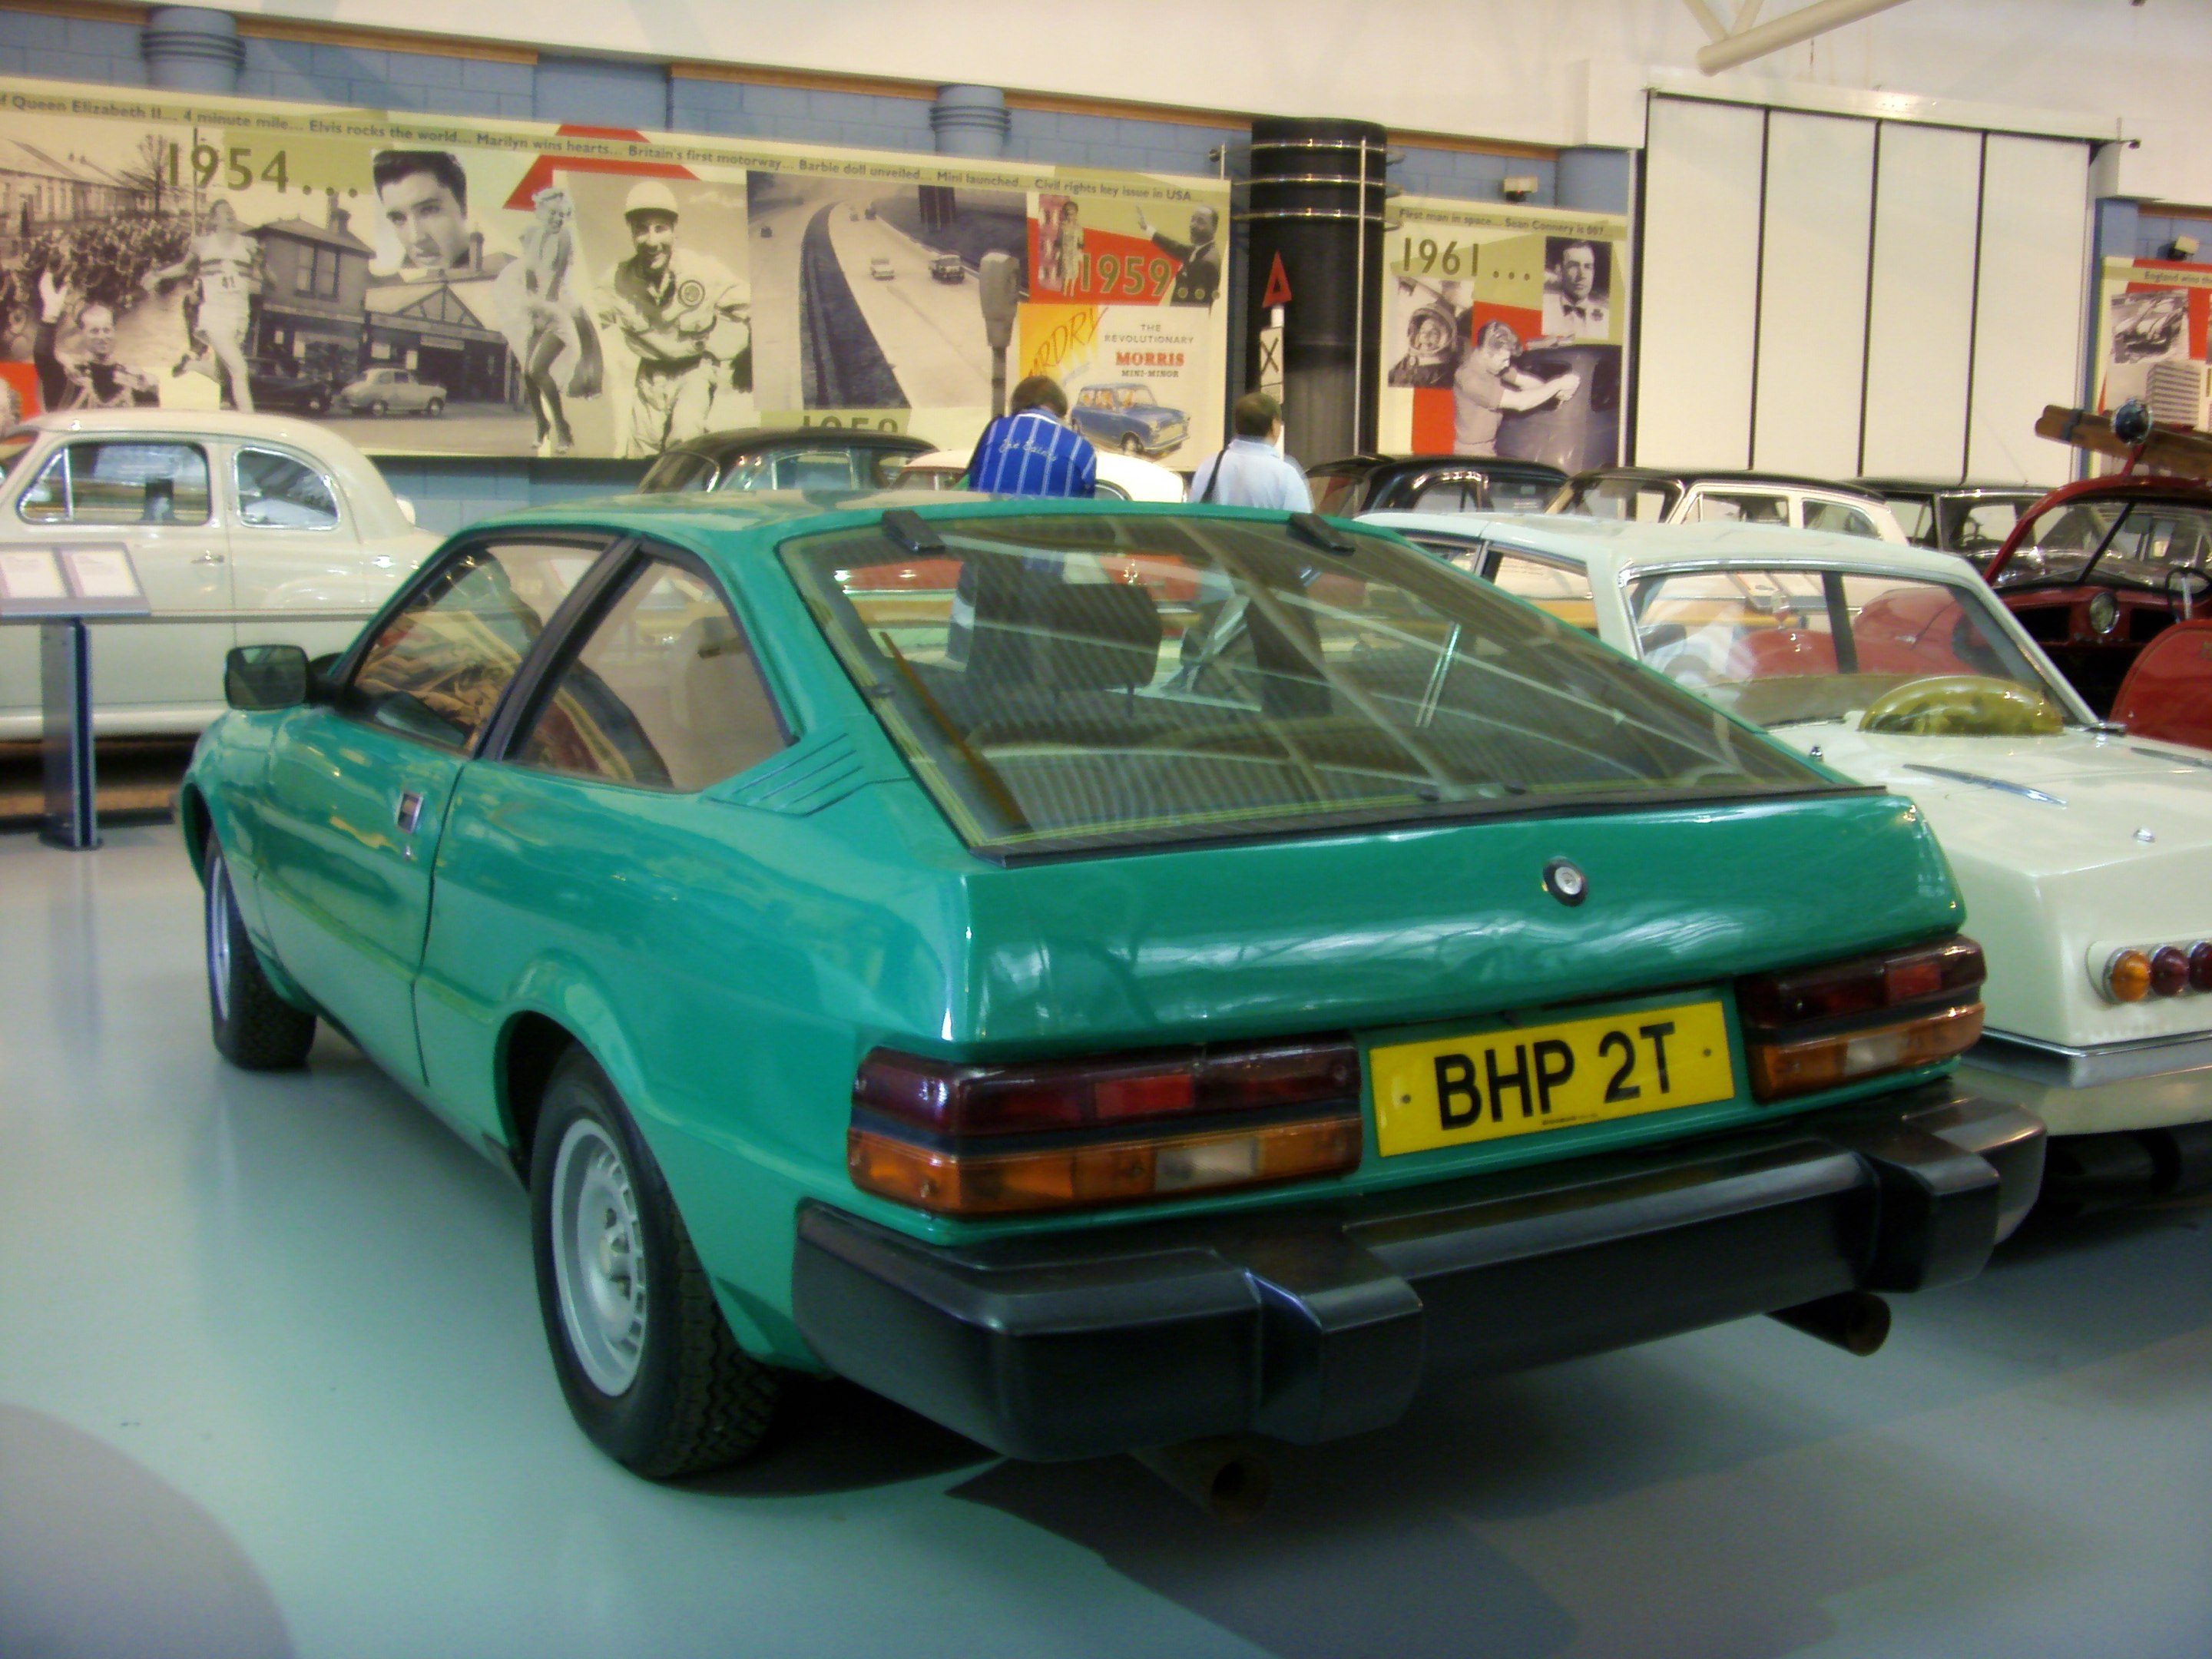 1978_Triumph_TR7_%28Project_Lynx%29_Heritage_Motor_Centre,_Gaydon_%281%29.jpg